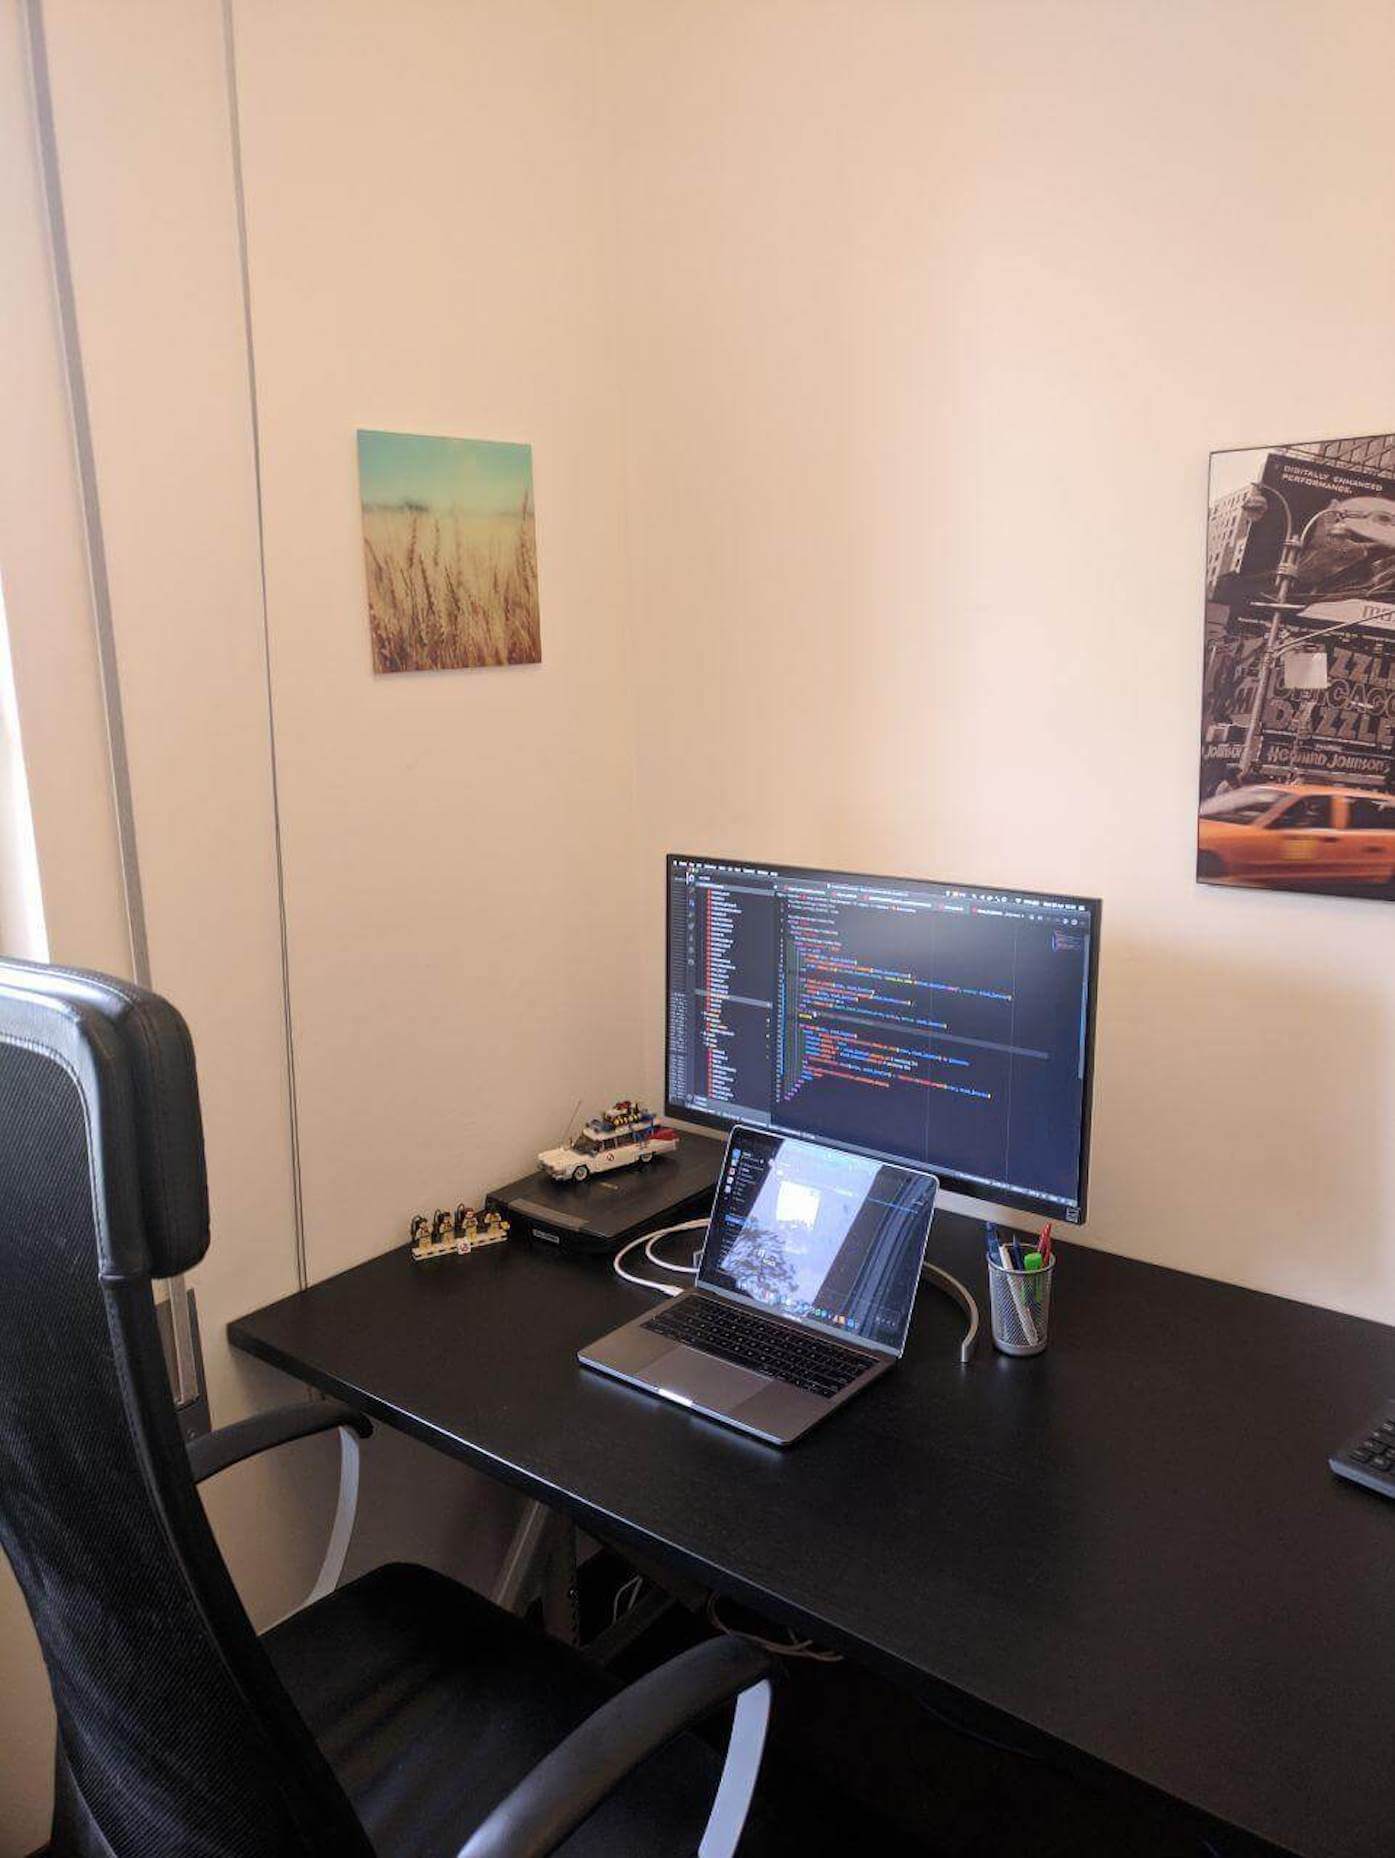 Mattia's home office setup